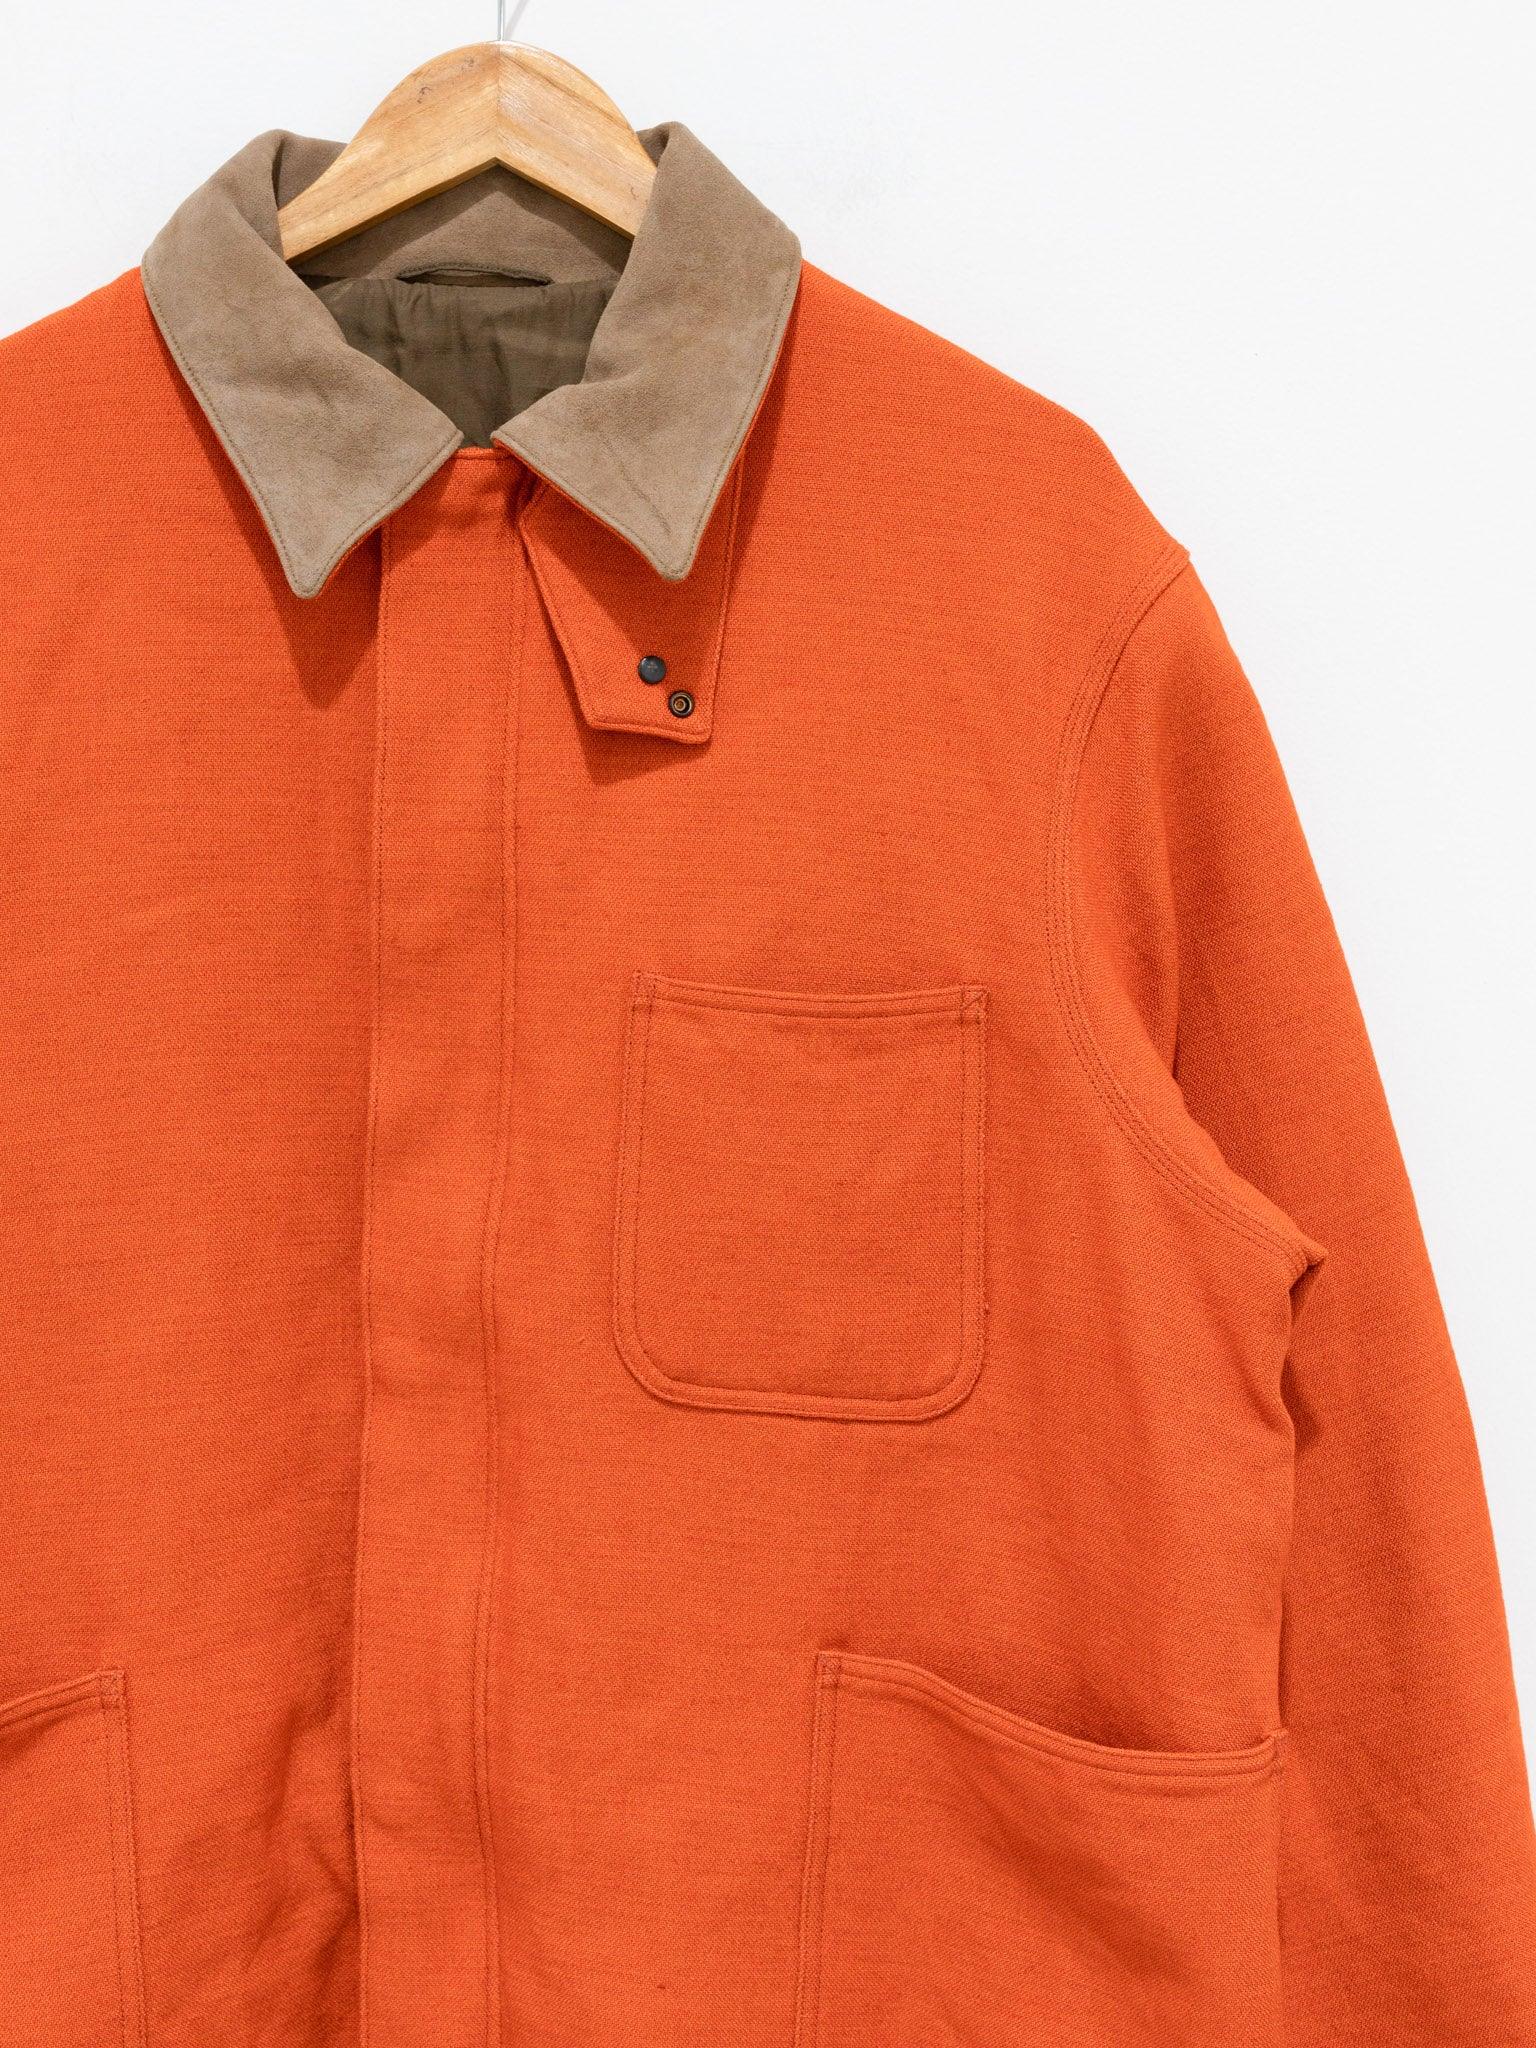 Namu Shop - Kaptain Sunshine Duck Chore Jacket - Orange